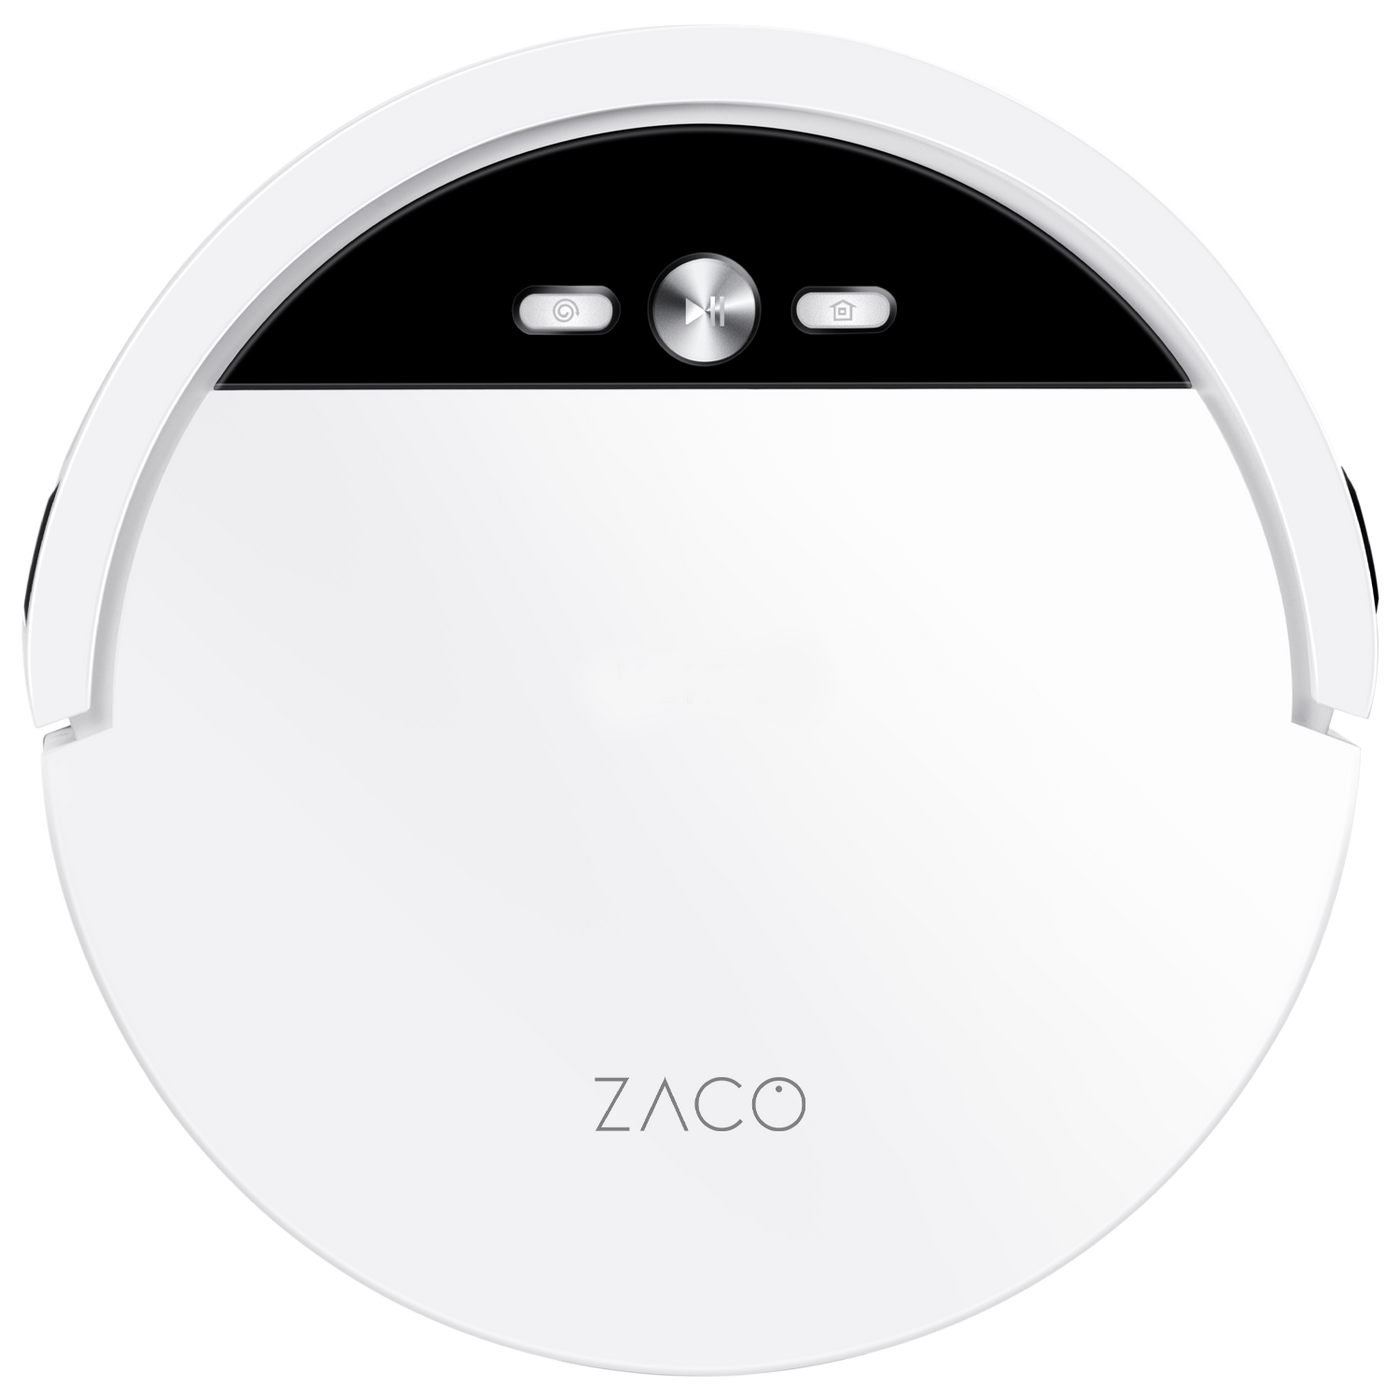 ZACO V4 robot vacuum cleaner